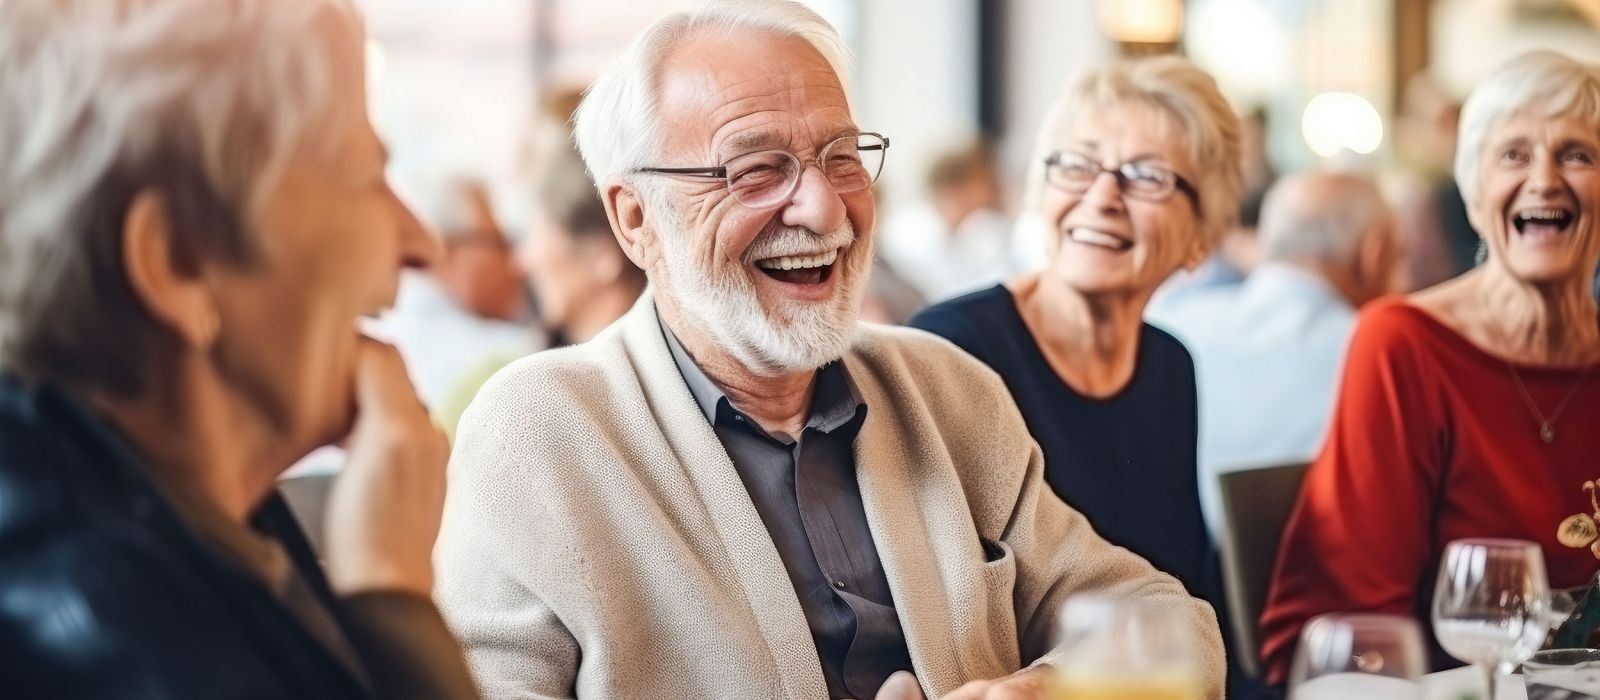 A candid photo of joyful senior citizens enjoying companionship at a social club, having fun and smiling.